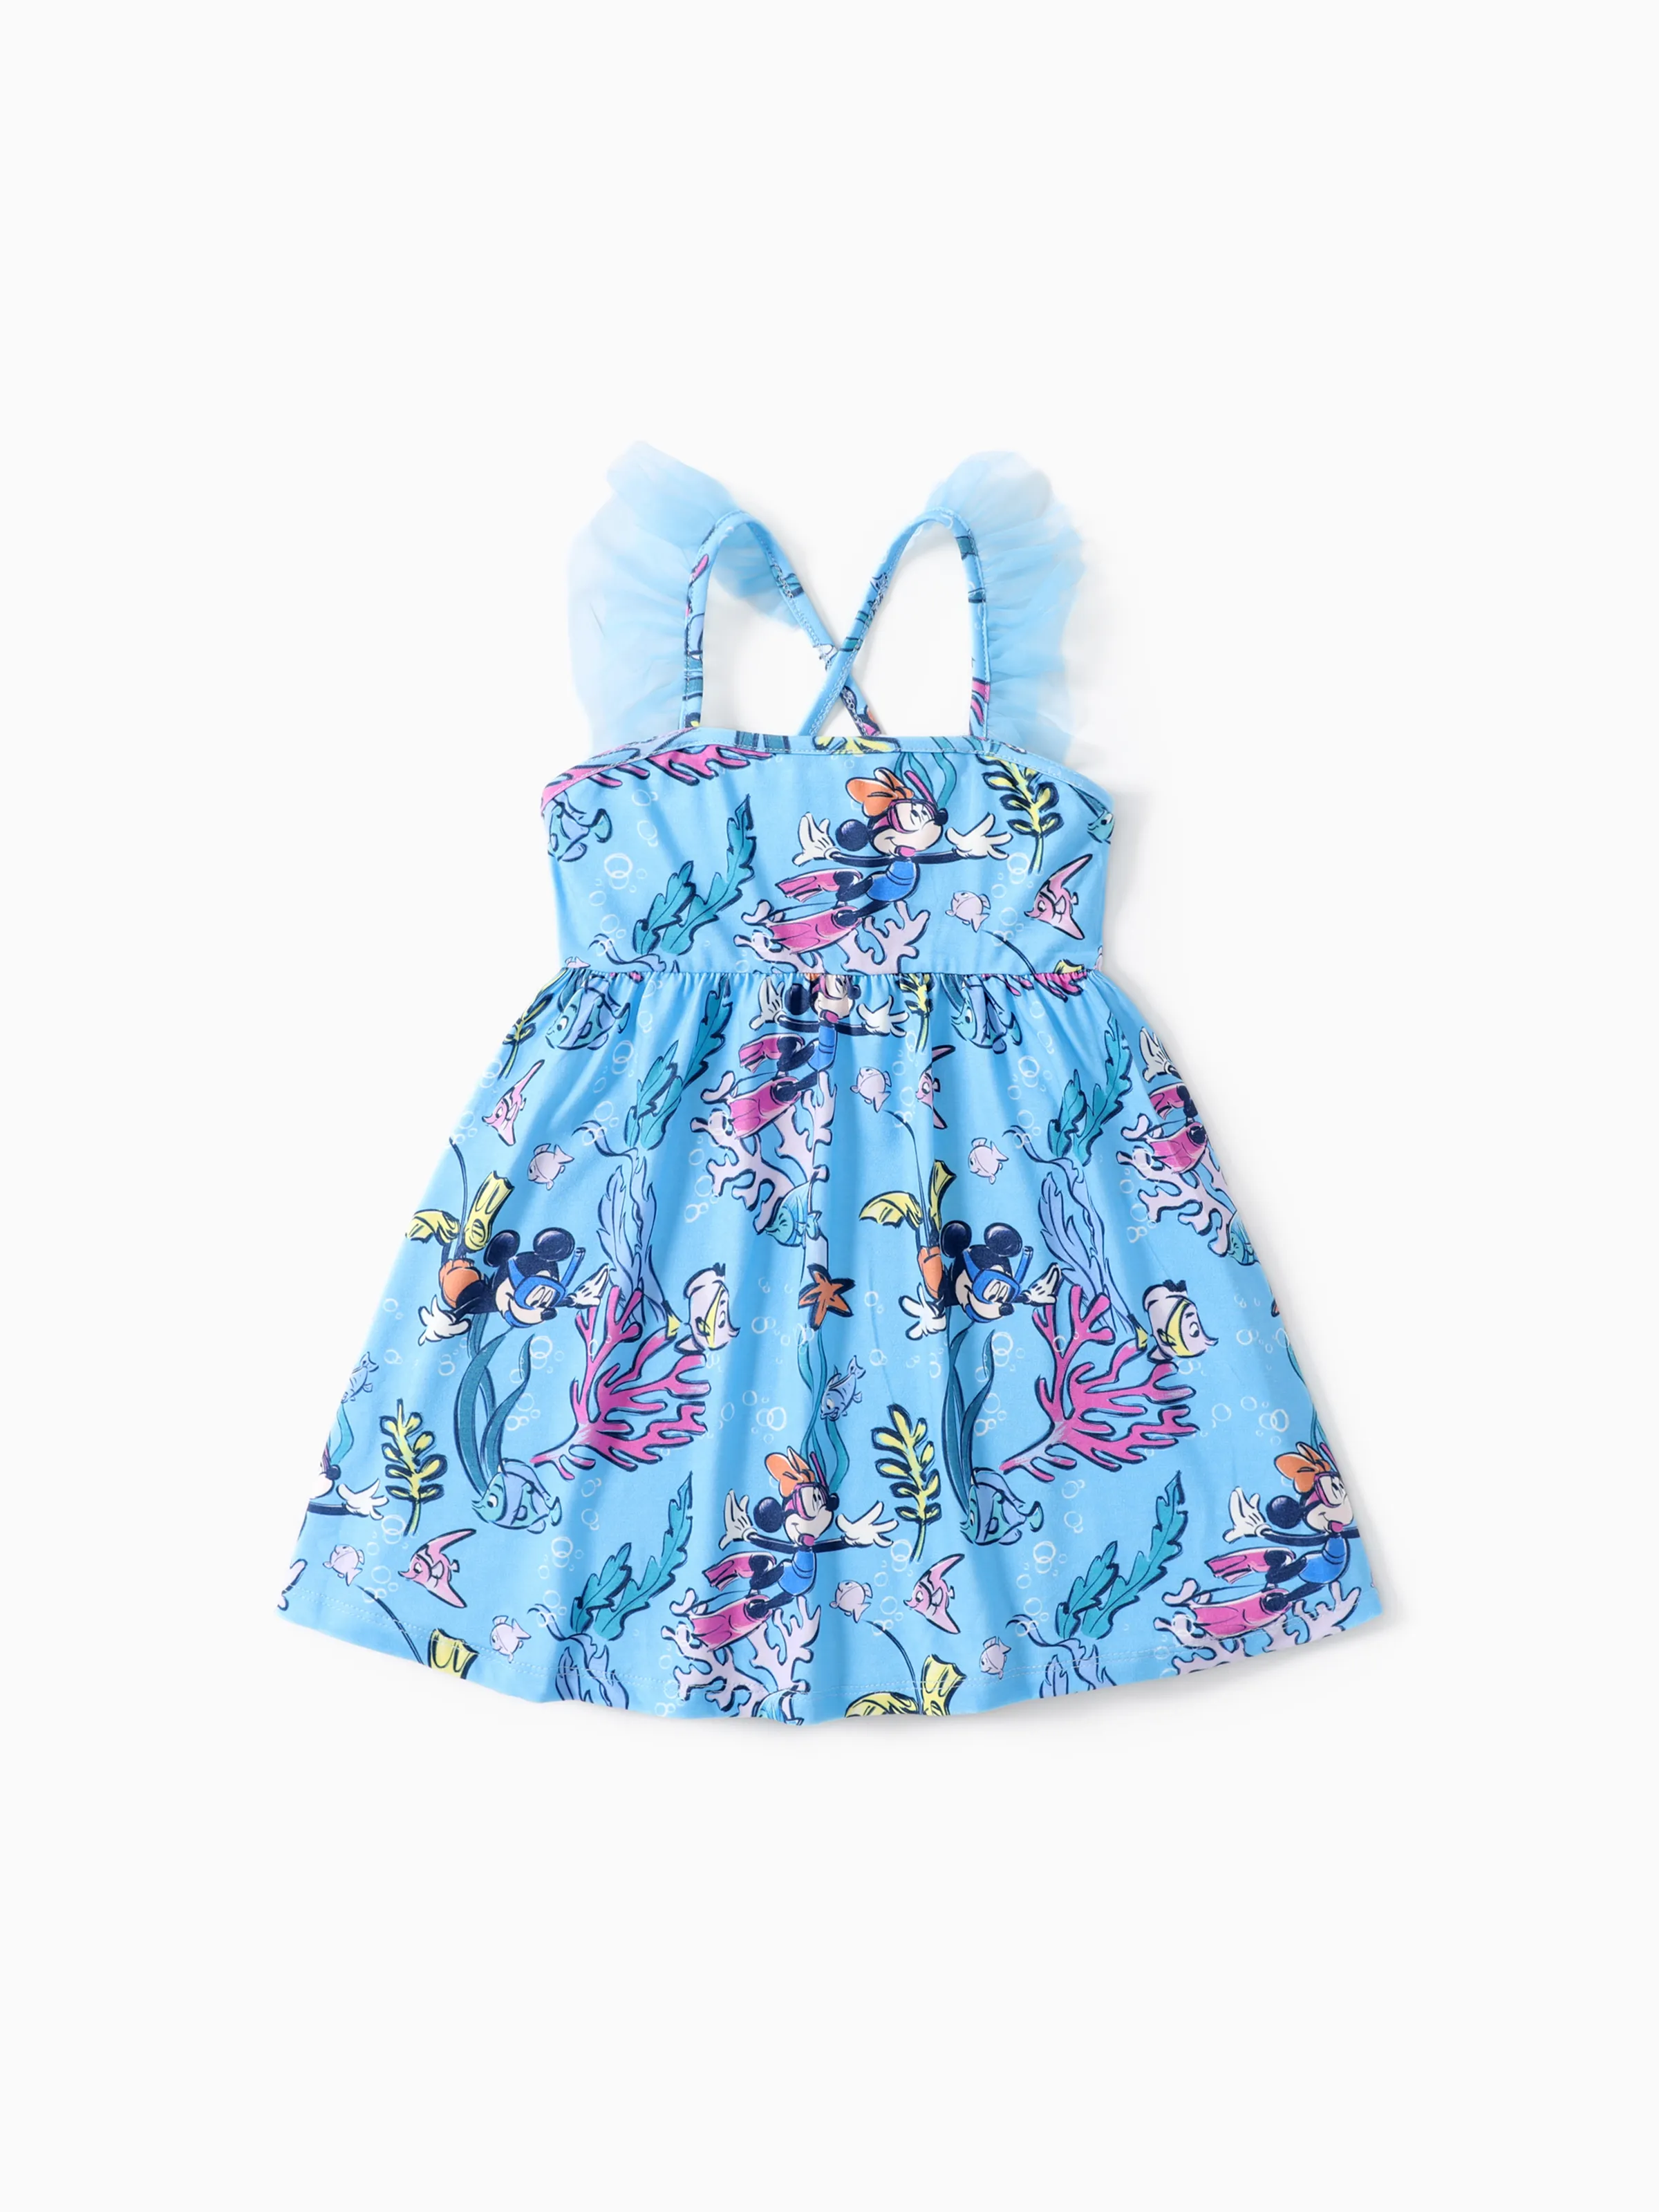 

Disney Mickey and Friends Toddler Girls 1pc Naia™ Character Coral Print Ruffled-sleeve Cross-back Dress